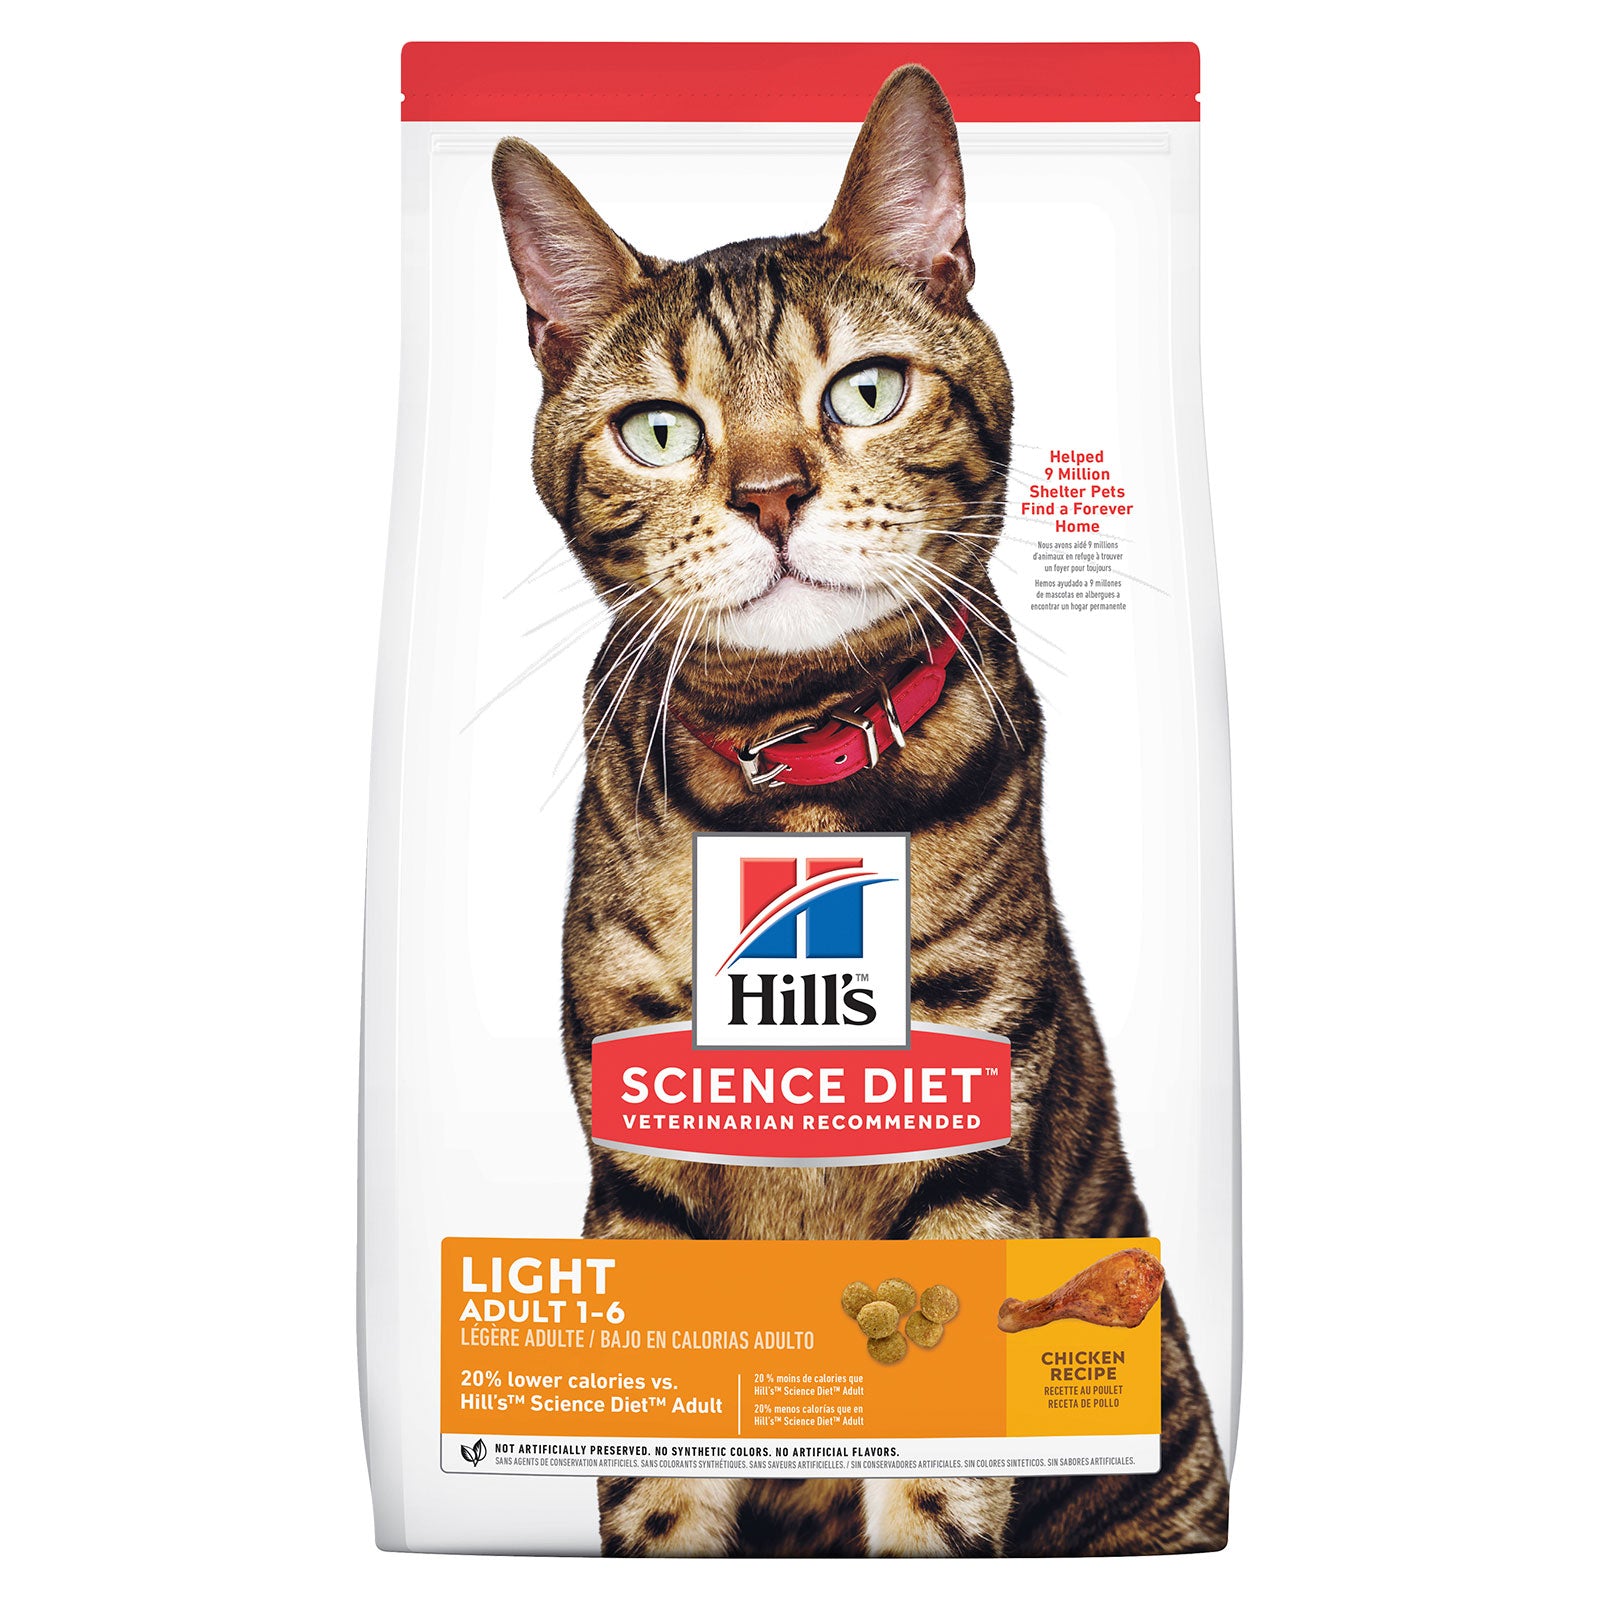 Hill's Science Diet Cat Food Adult Light